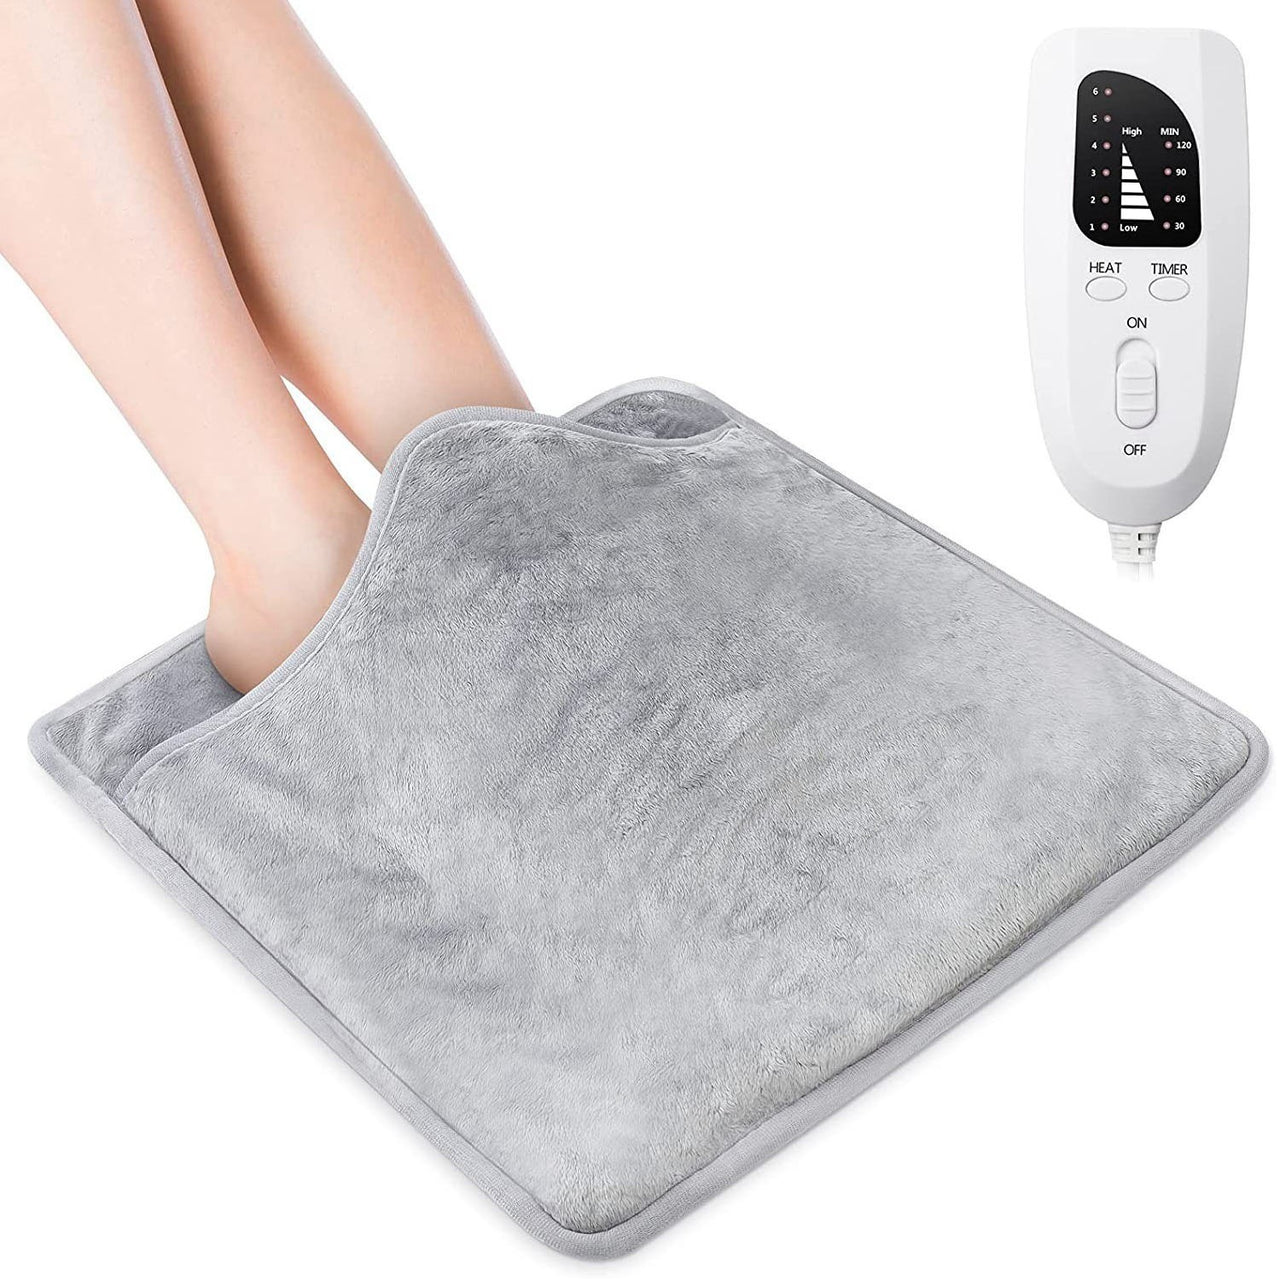 Electric Foot Warmer Heater Fast Heating Pad Cushion Mat Machine Washable